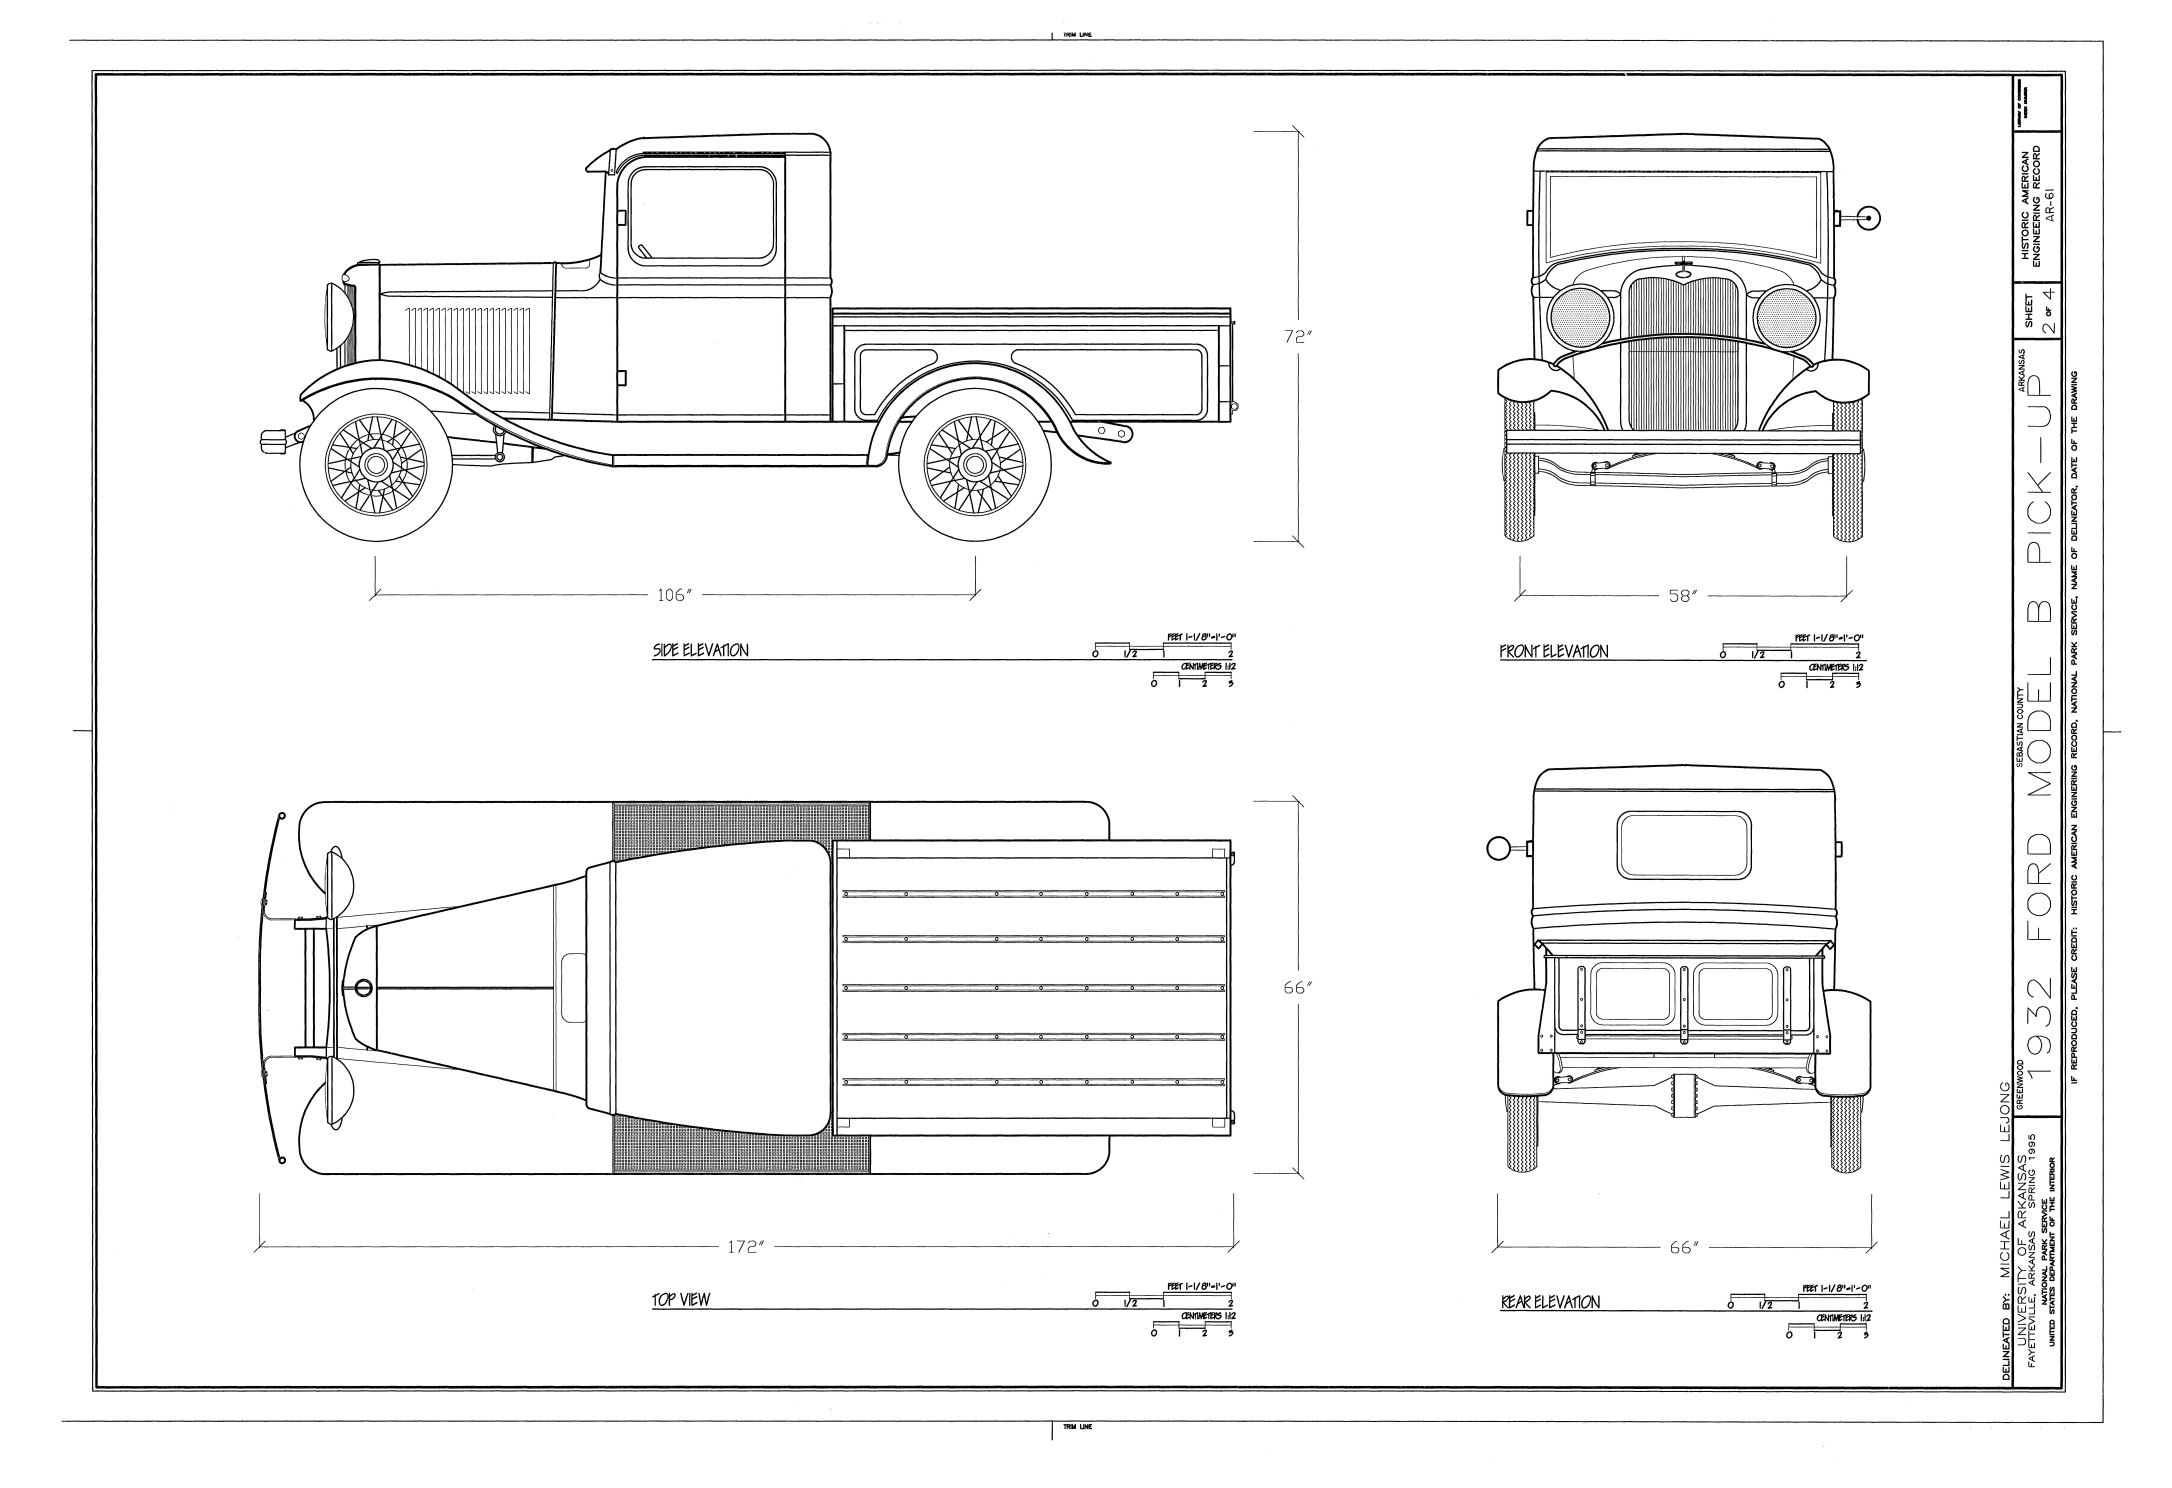 Ford Model B Pick-Up blueprint